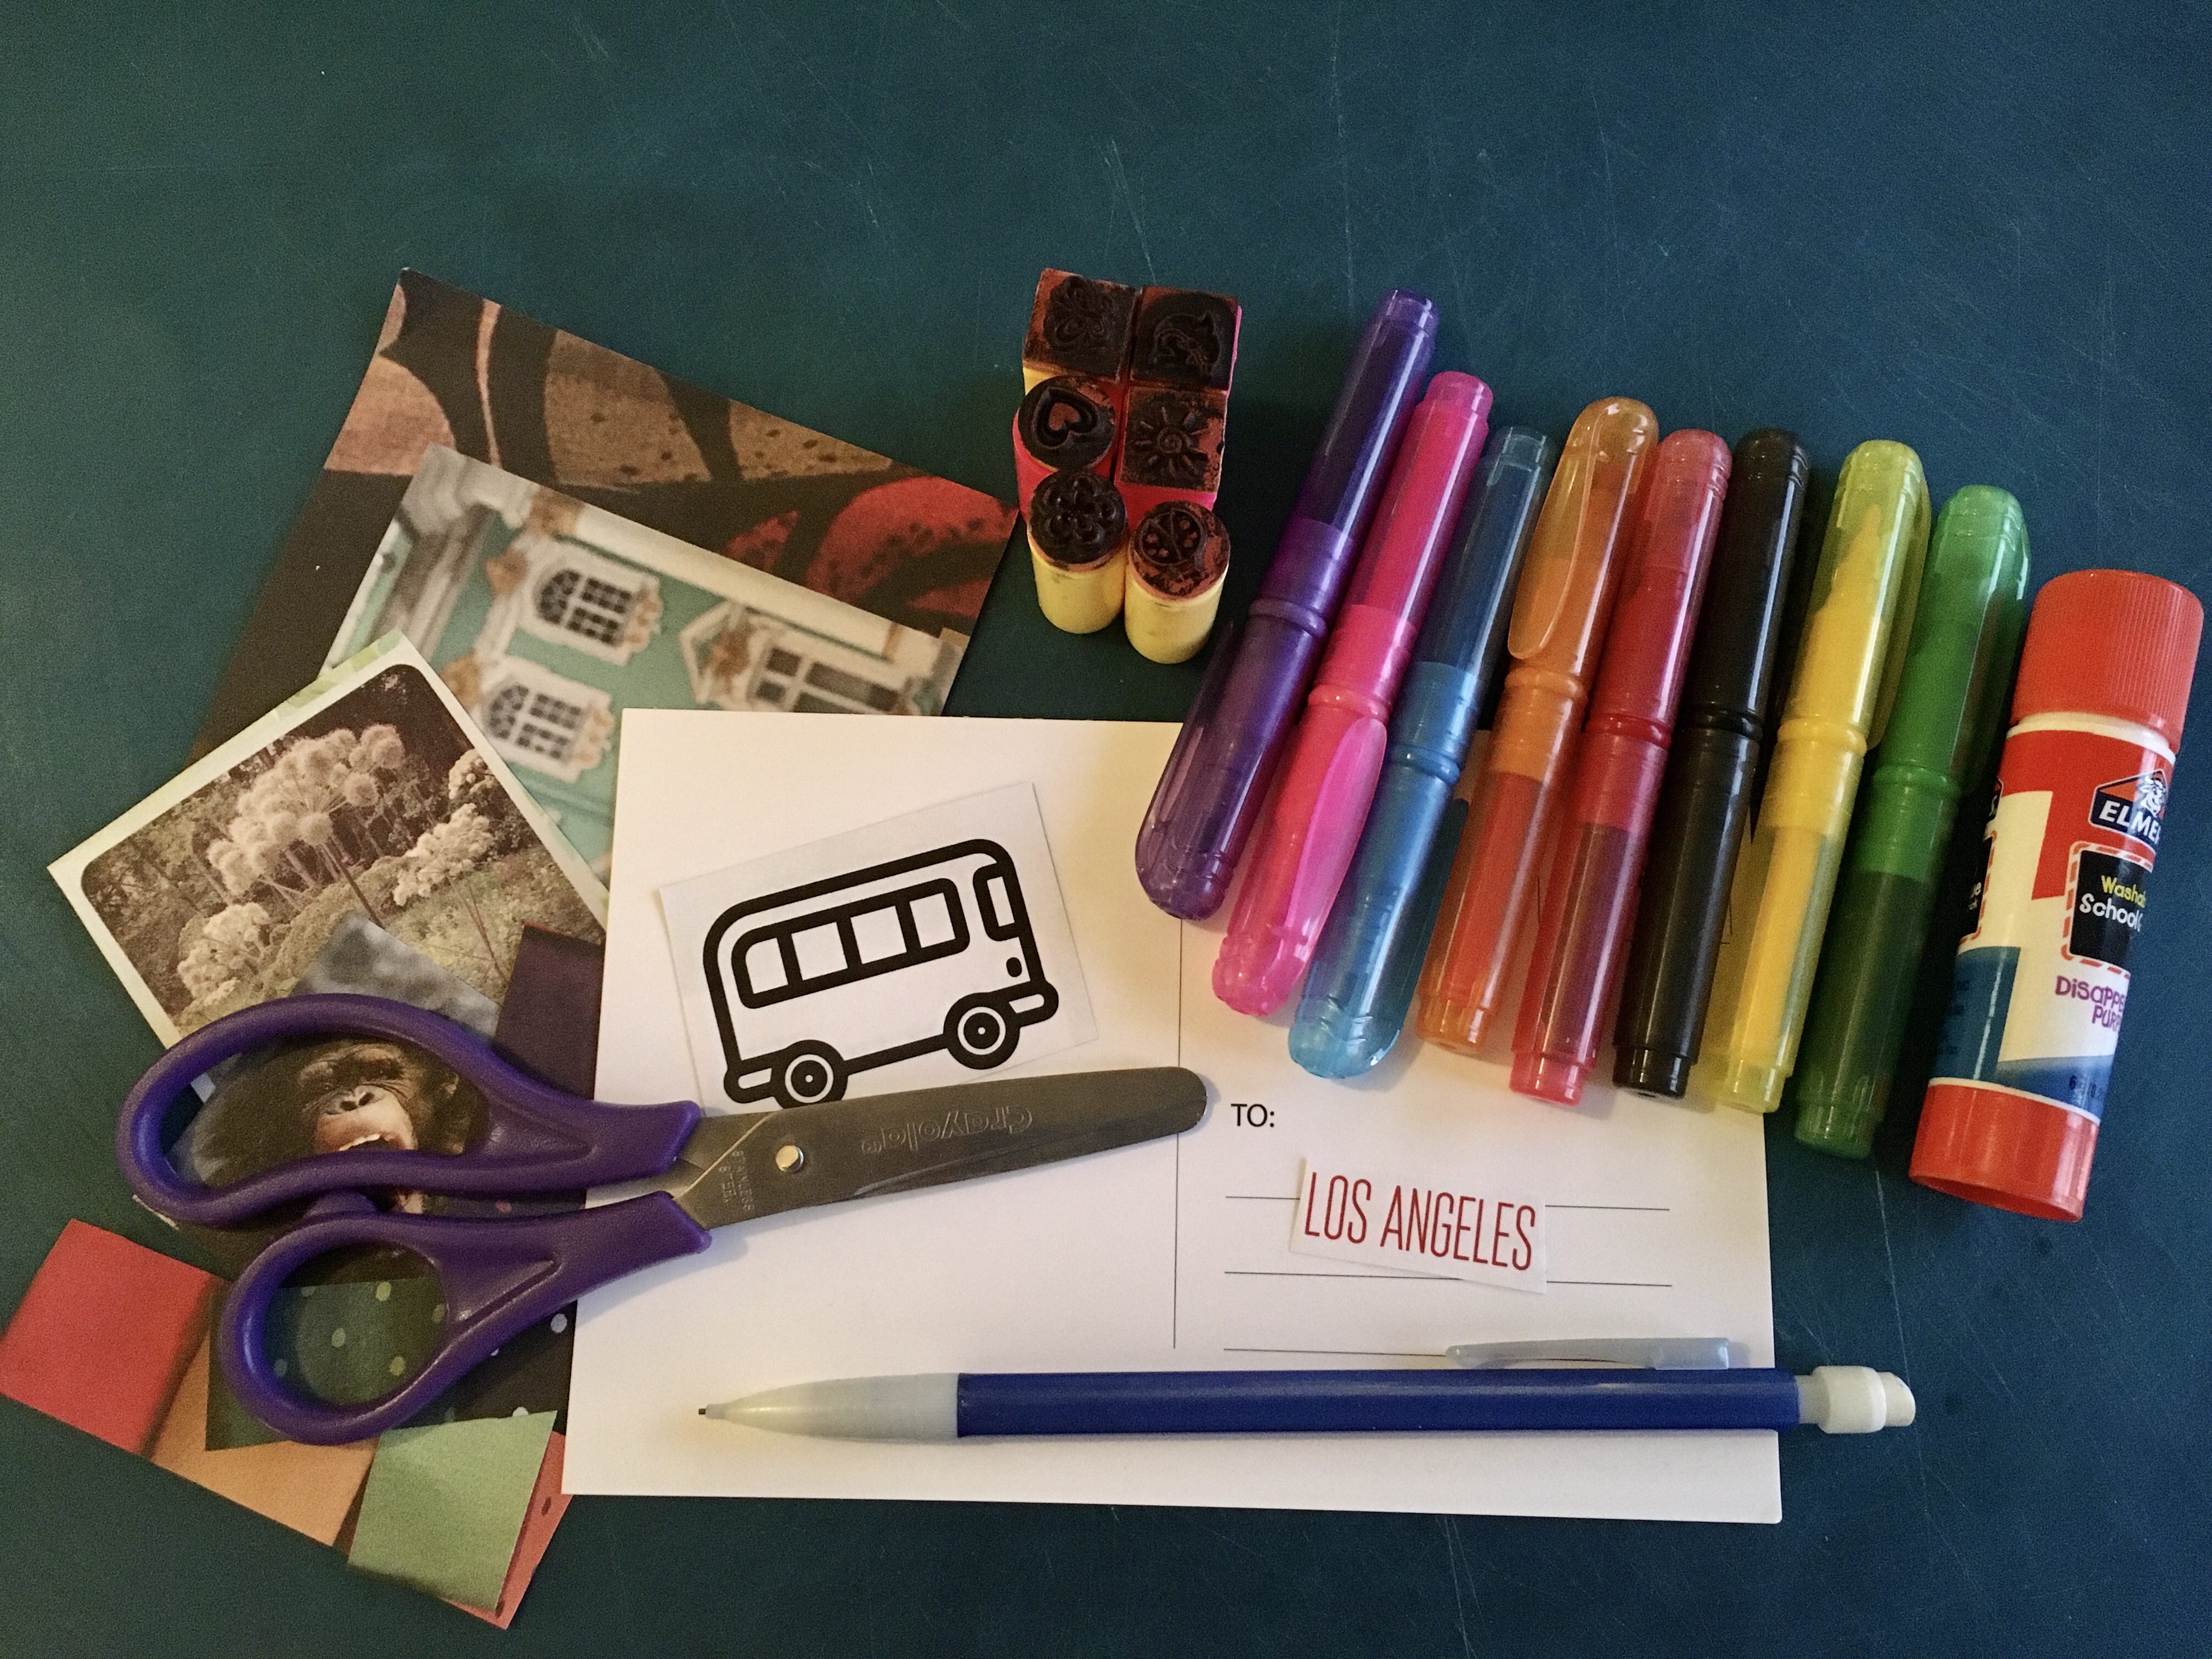 Postcard, markers, gluestick, scissors, and collage materials